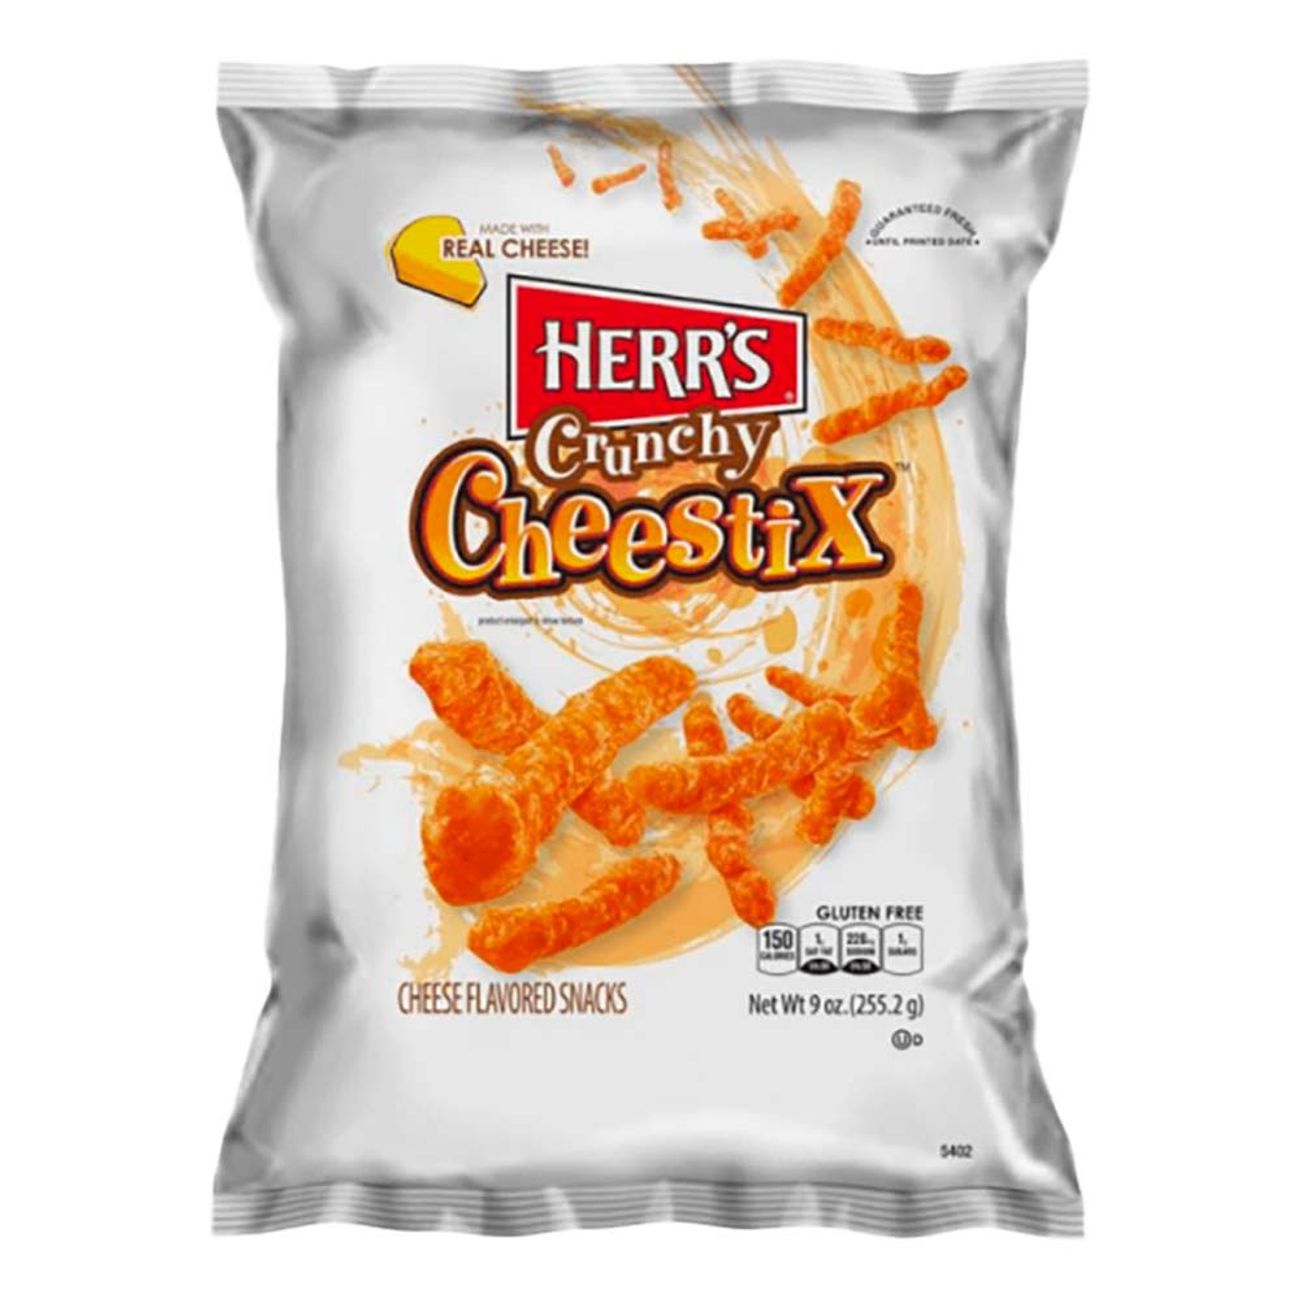 herrs-crunchy-sheestix-94716-1